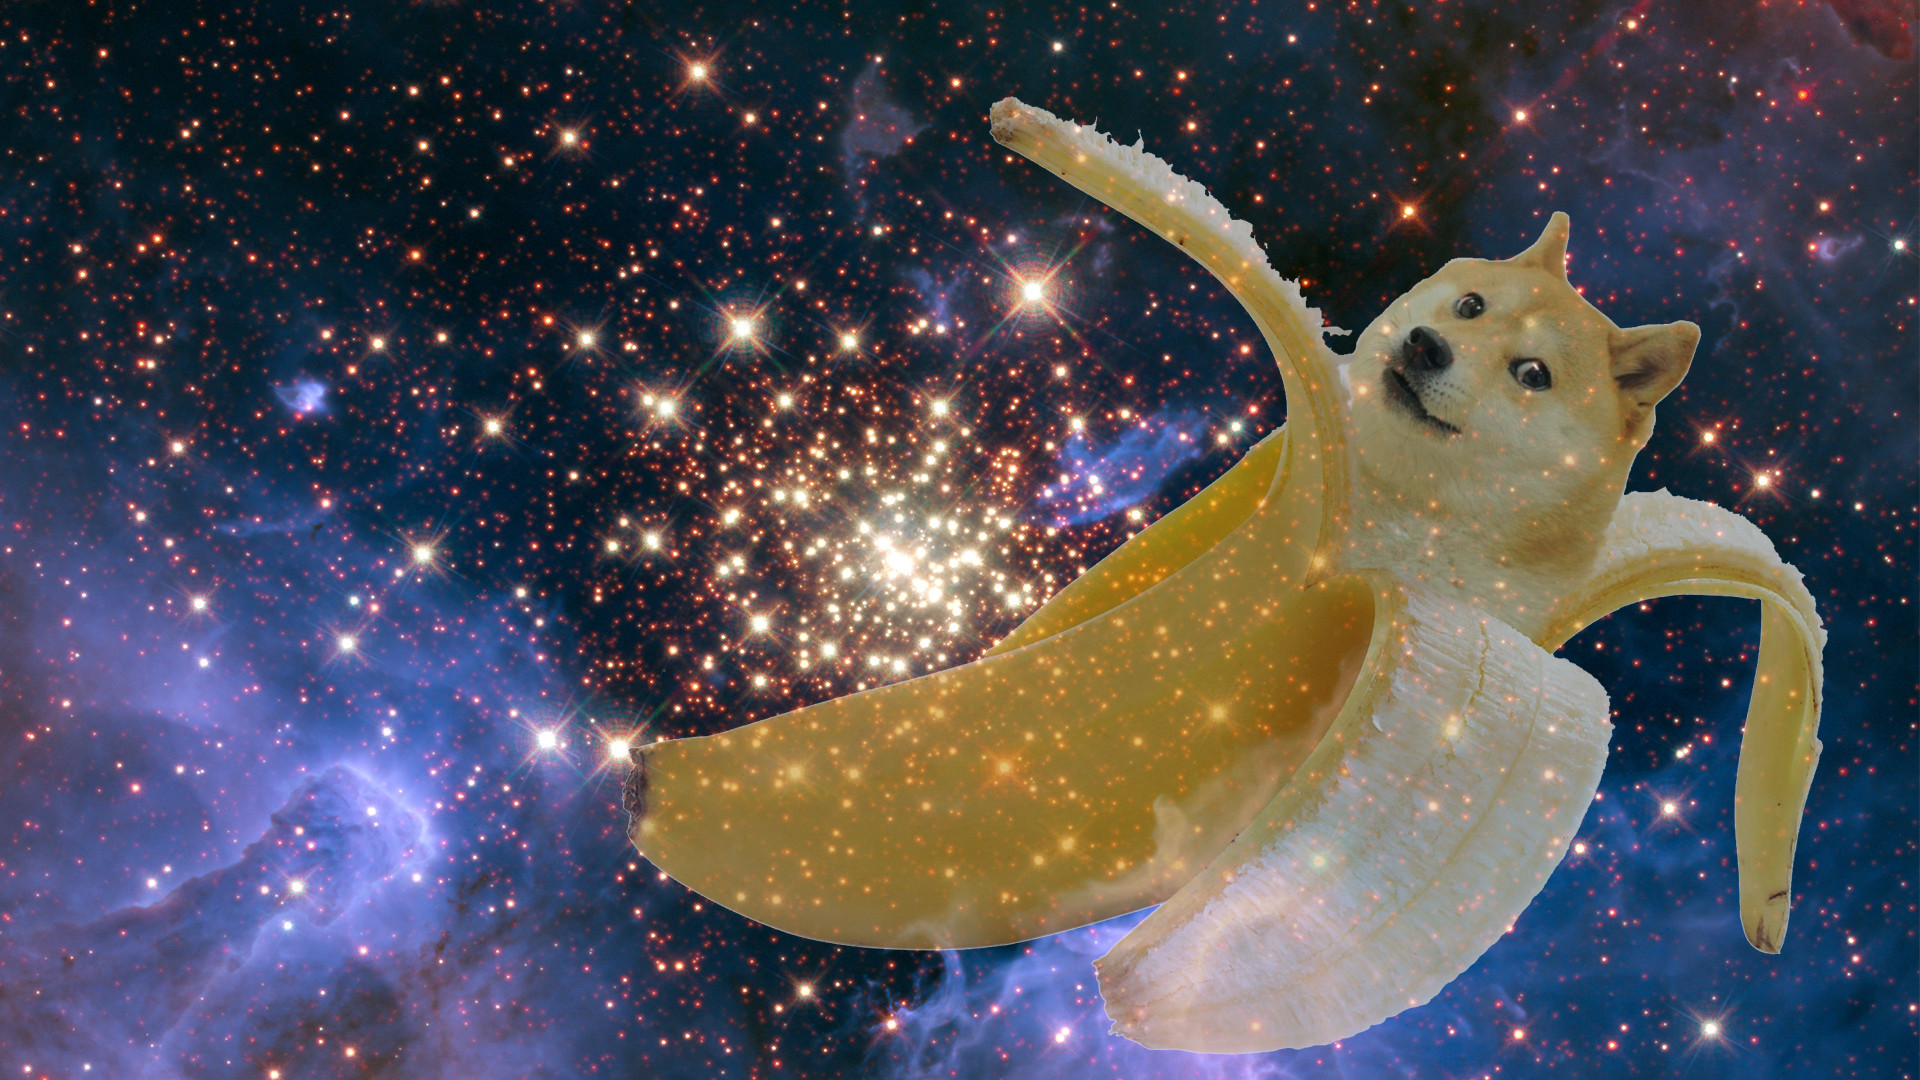 Собака на фоне космоса